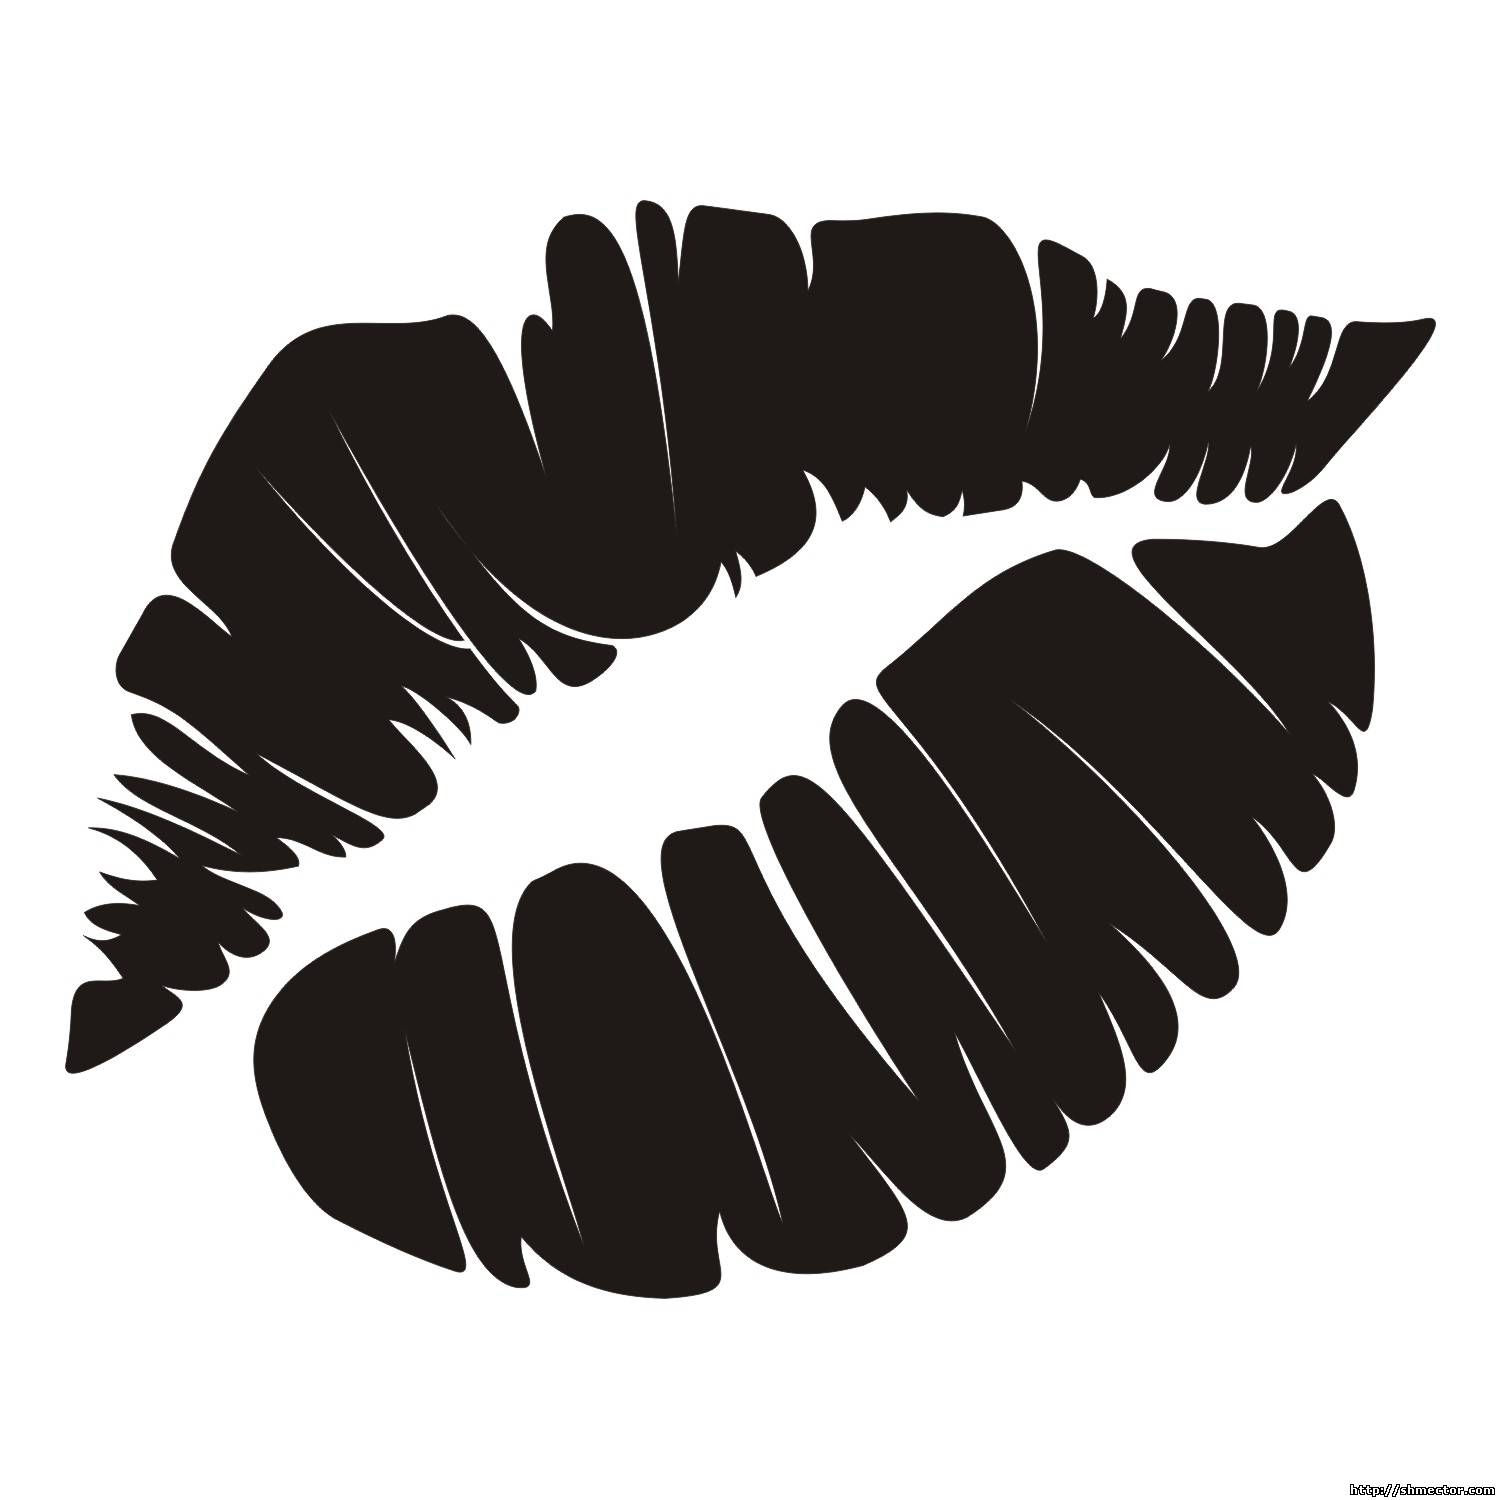 free vector clipart lips - photo #16